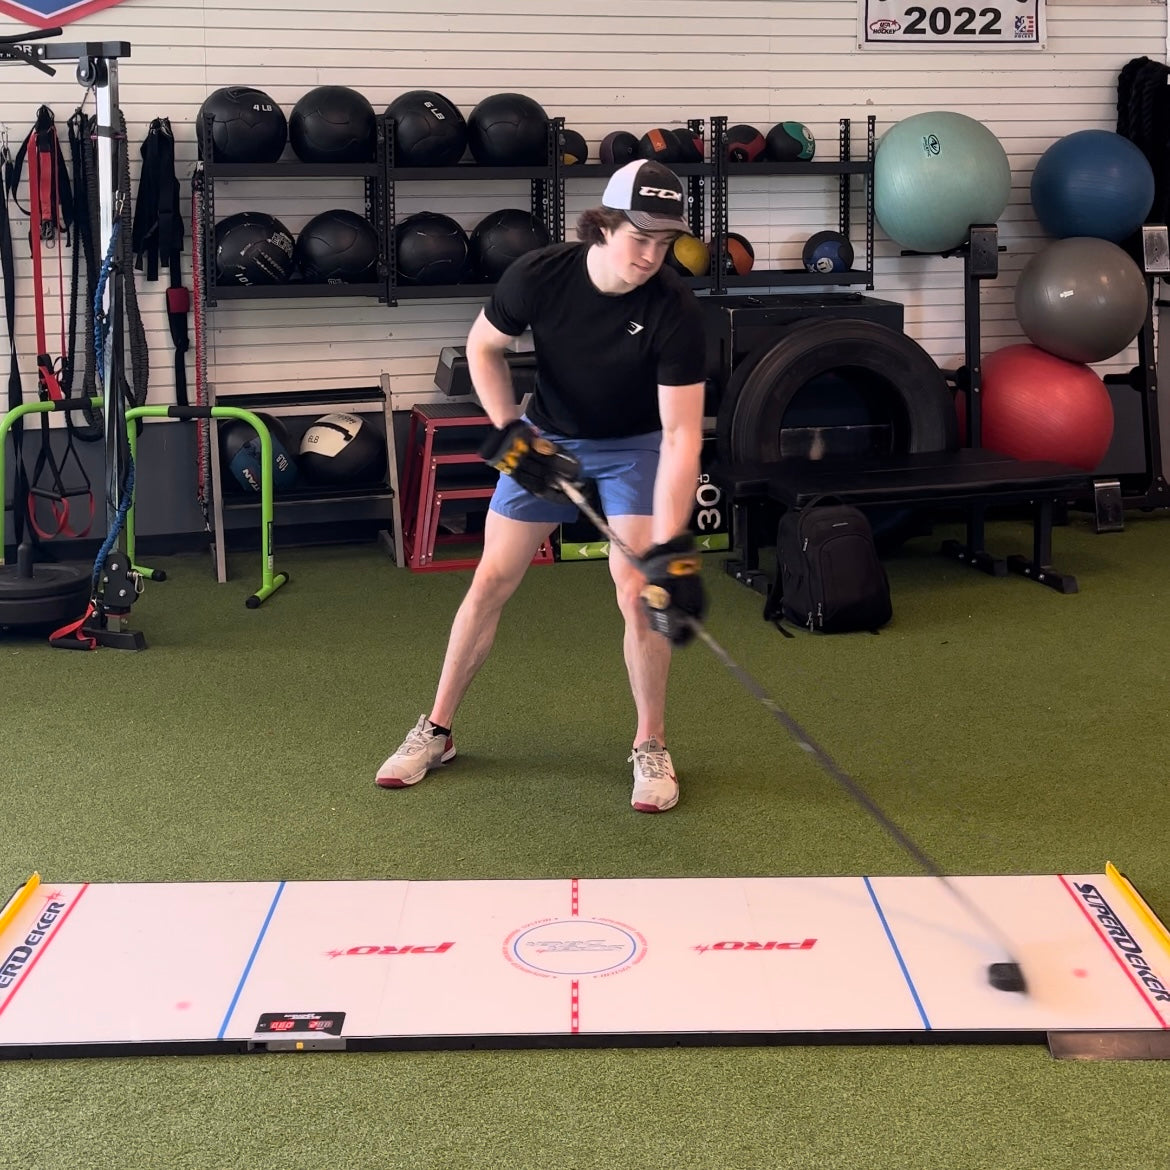 The SuperDekerPRO Digital Stickhandling Trainer is the best off-ice hockey training device for training fast hockey hands! Upgrade to the SuperDekerPRO for advanced hockey training at home or anywhere else!